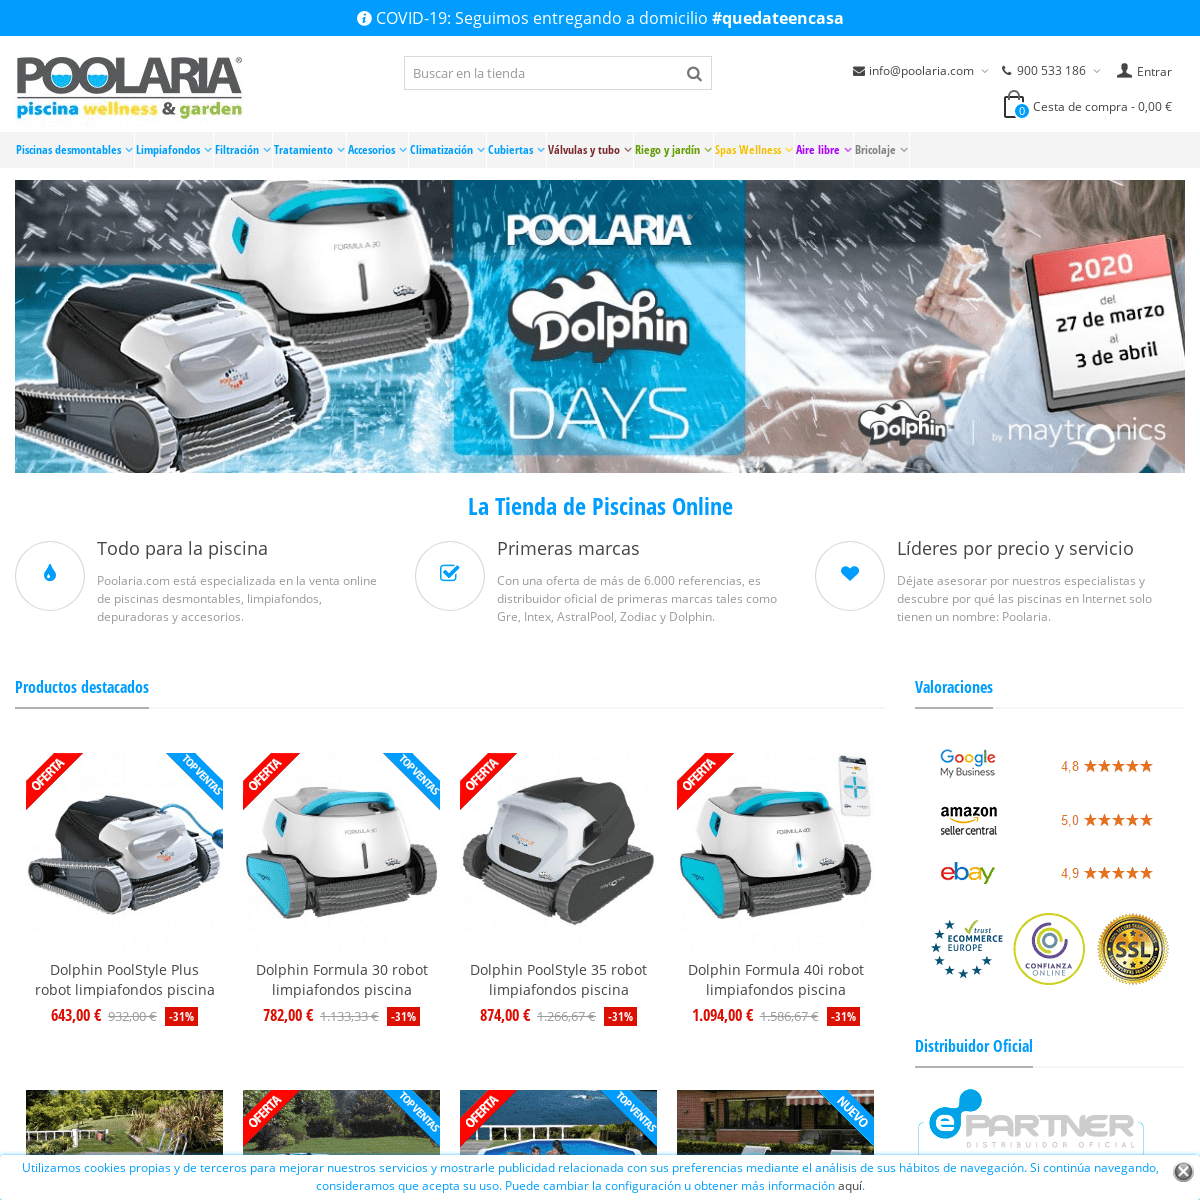 A complete backup of poolaria.com